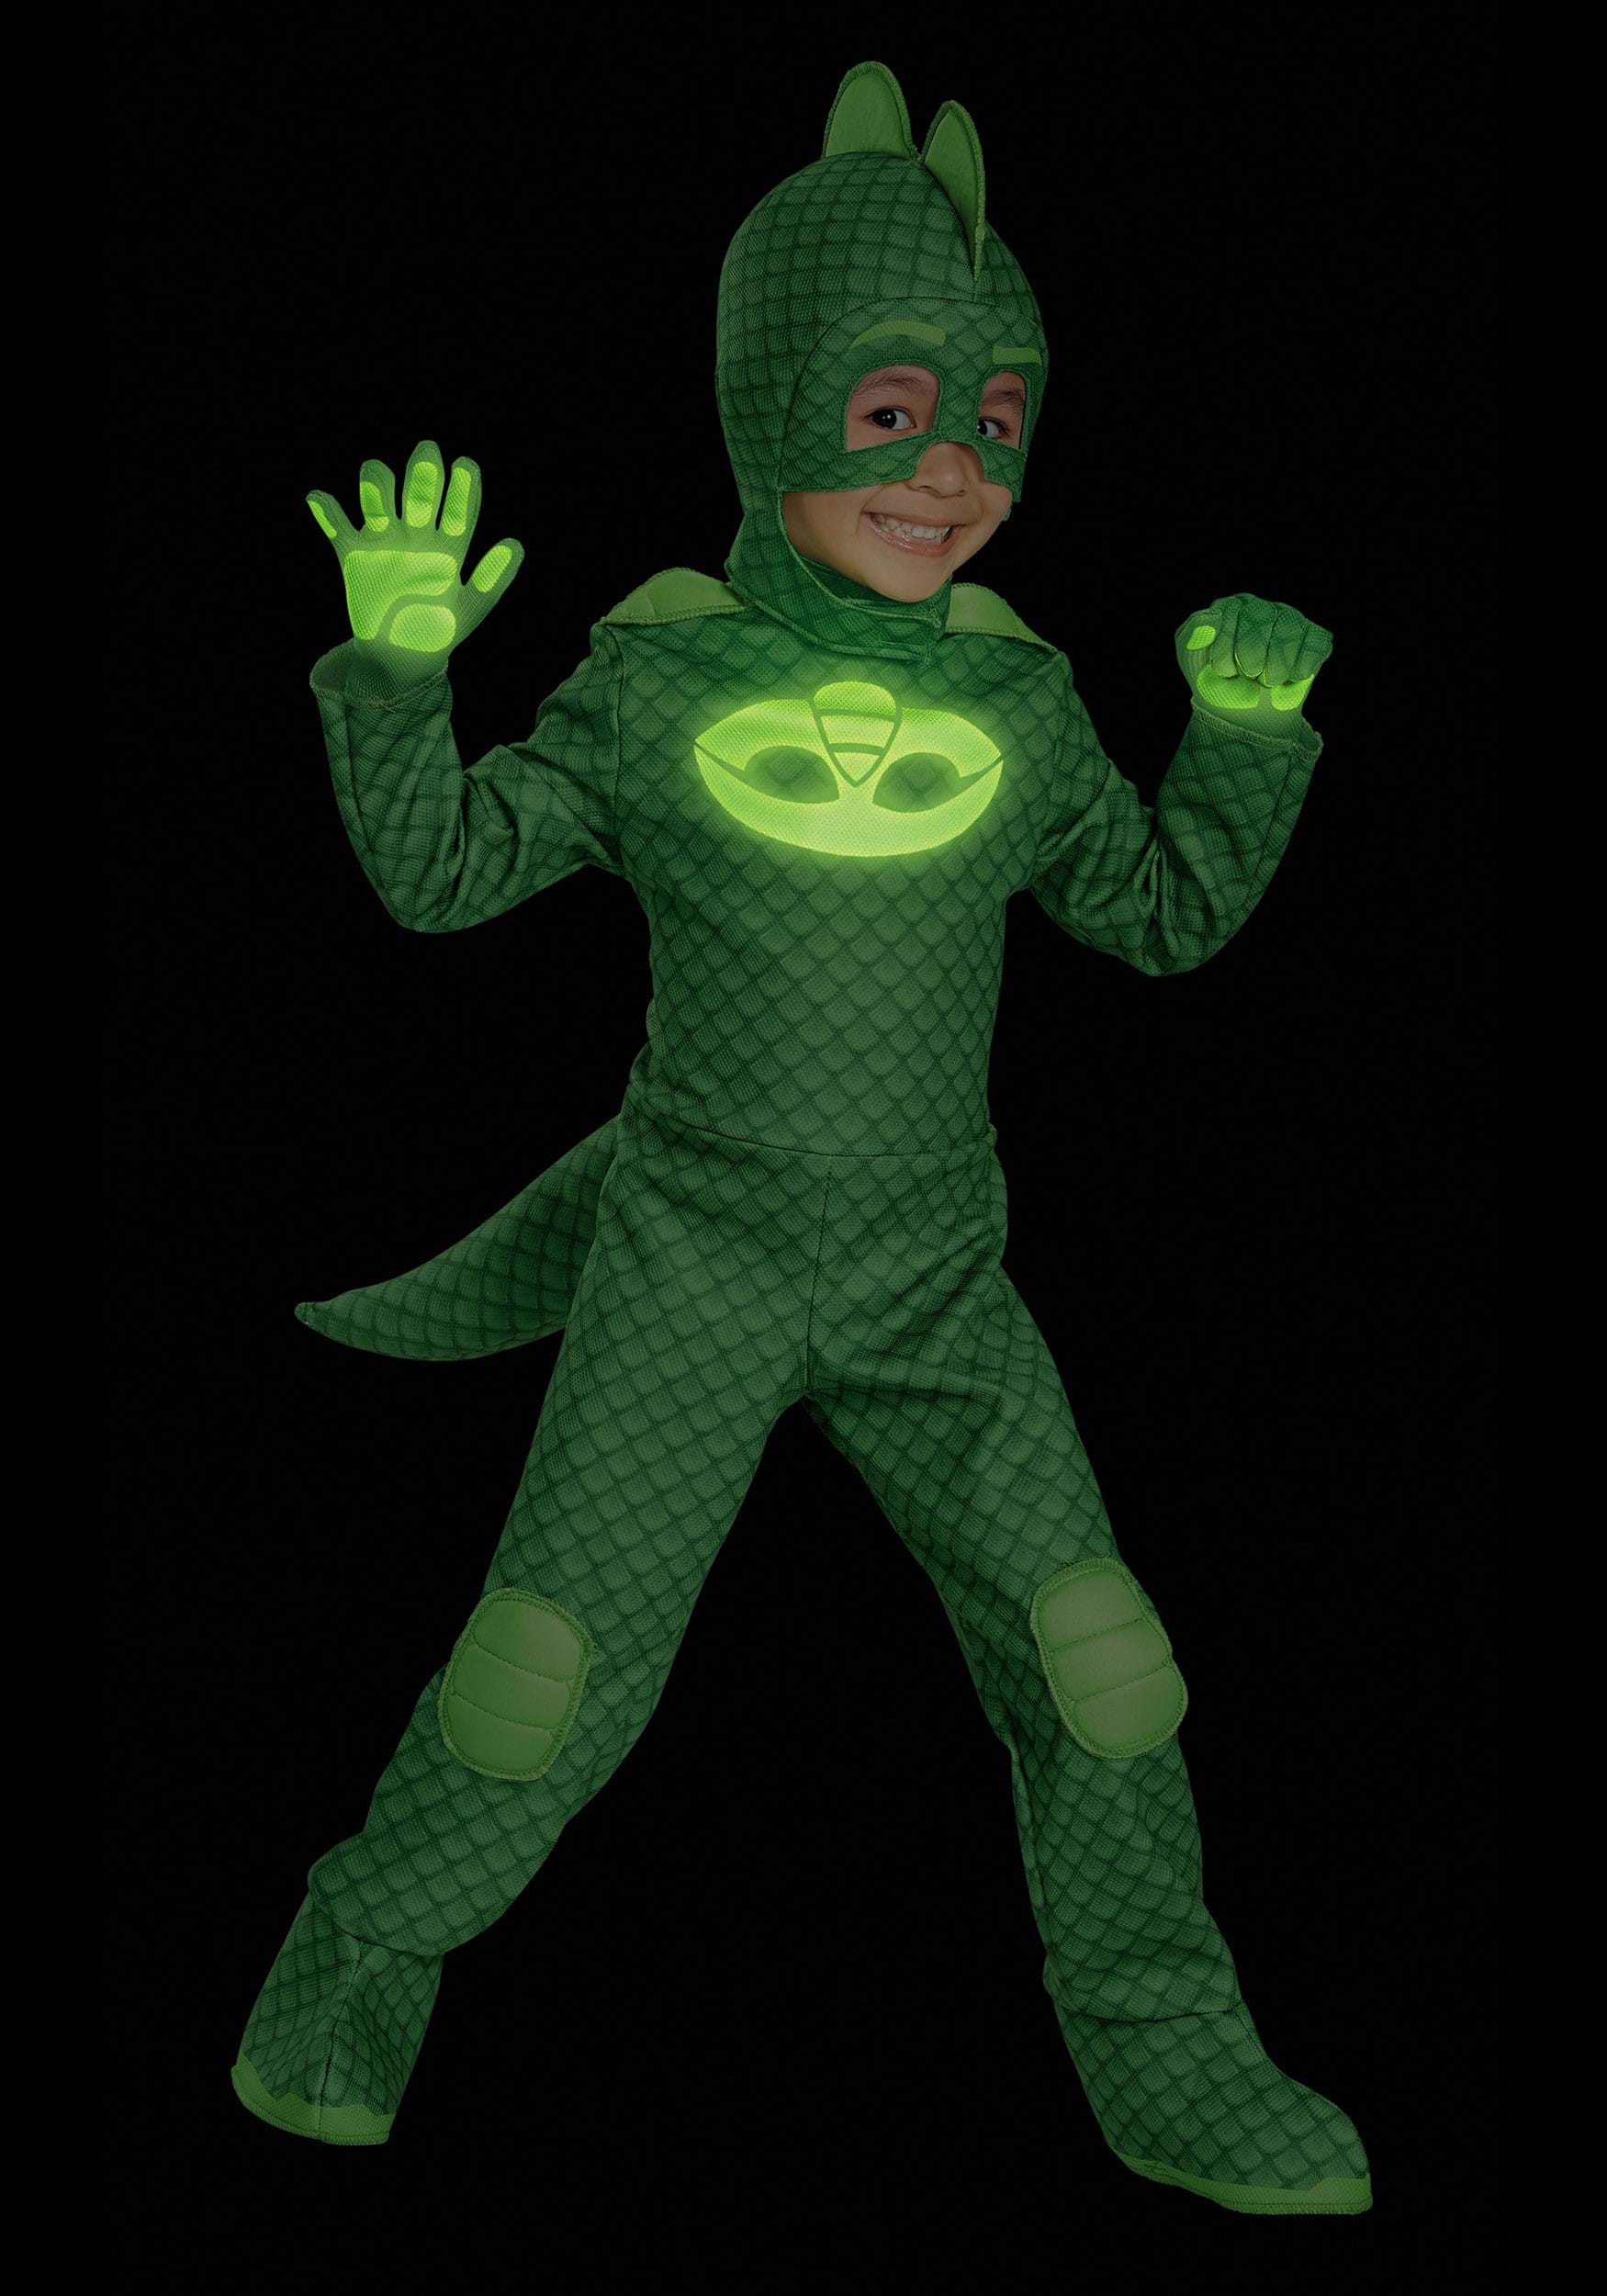 Boys Deluxe Gekko Costume from PJ Masks